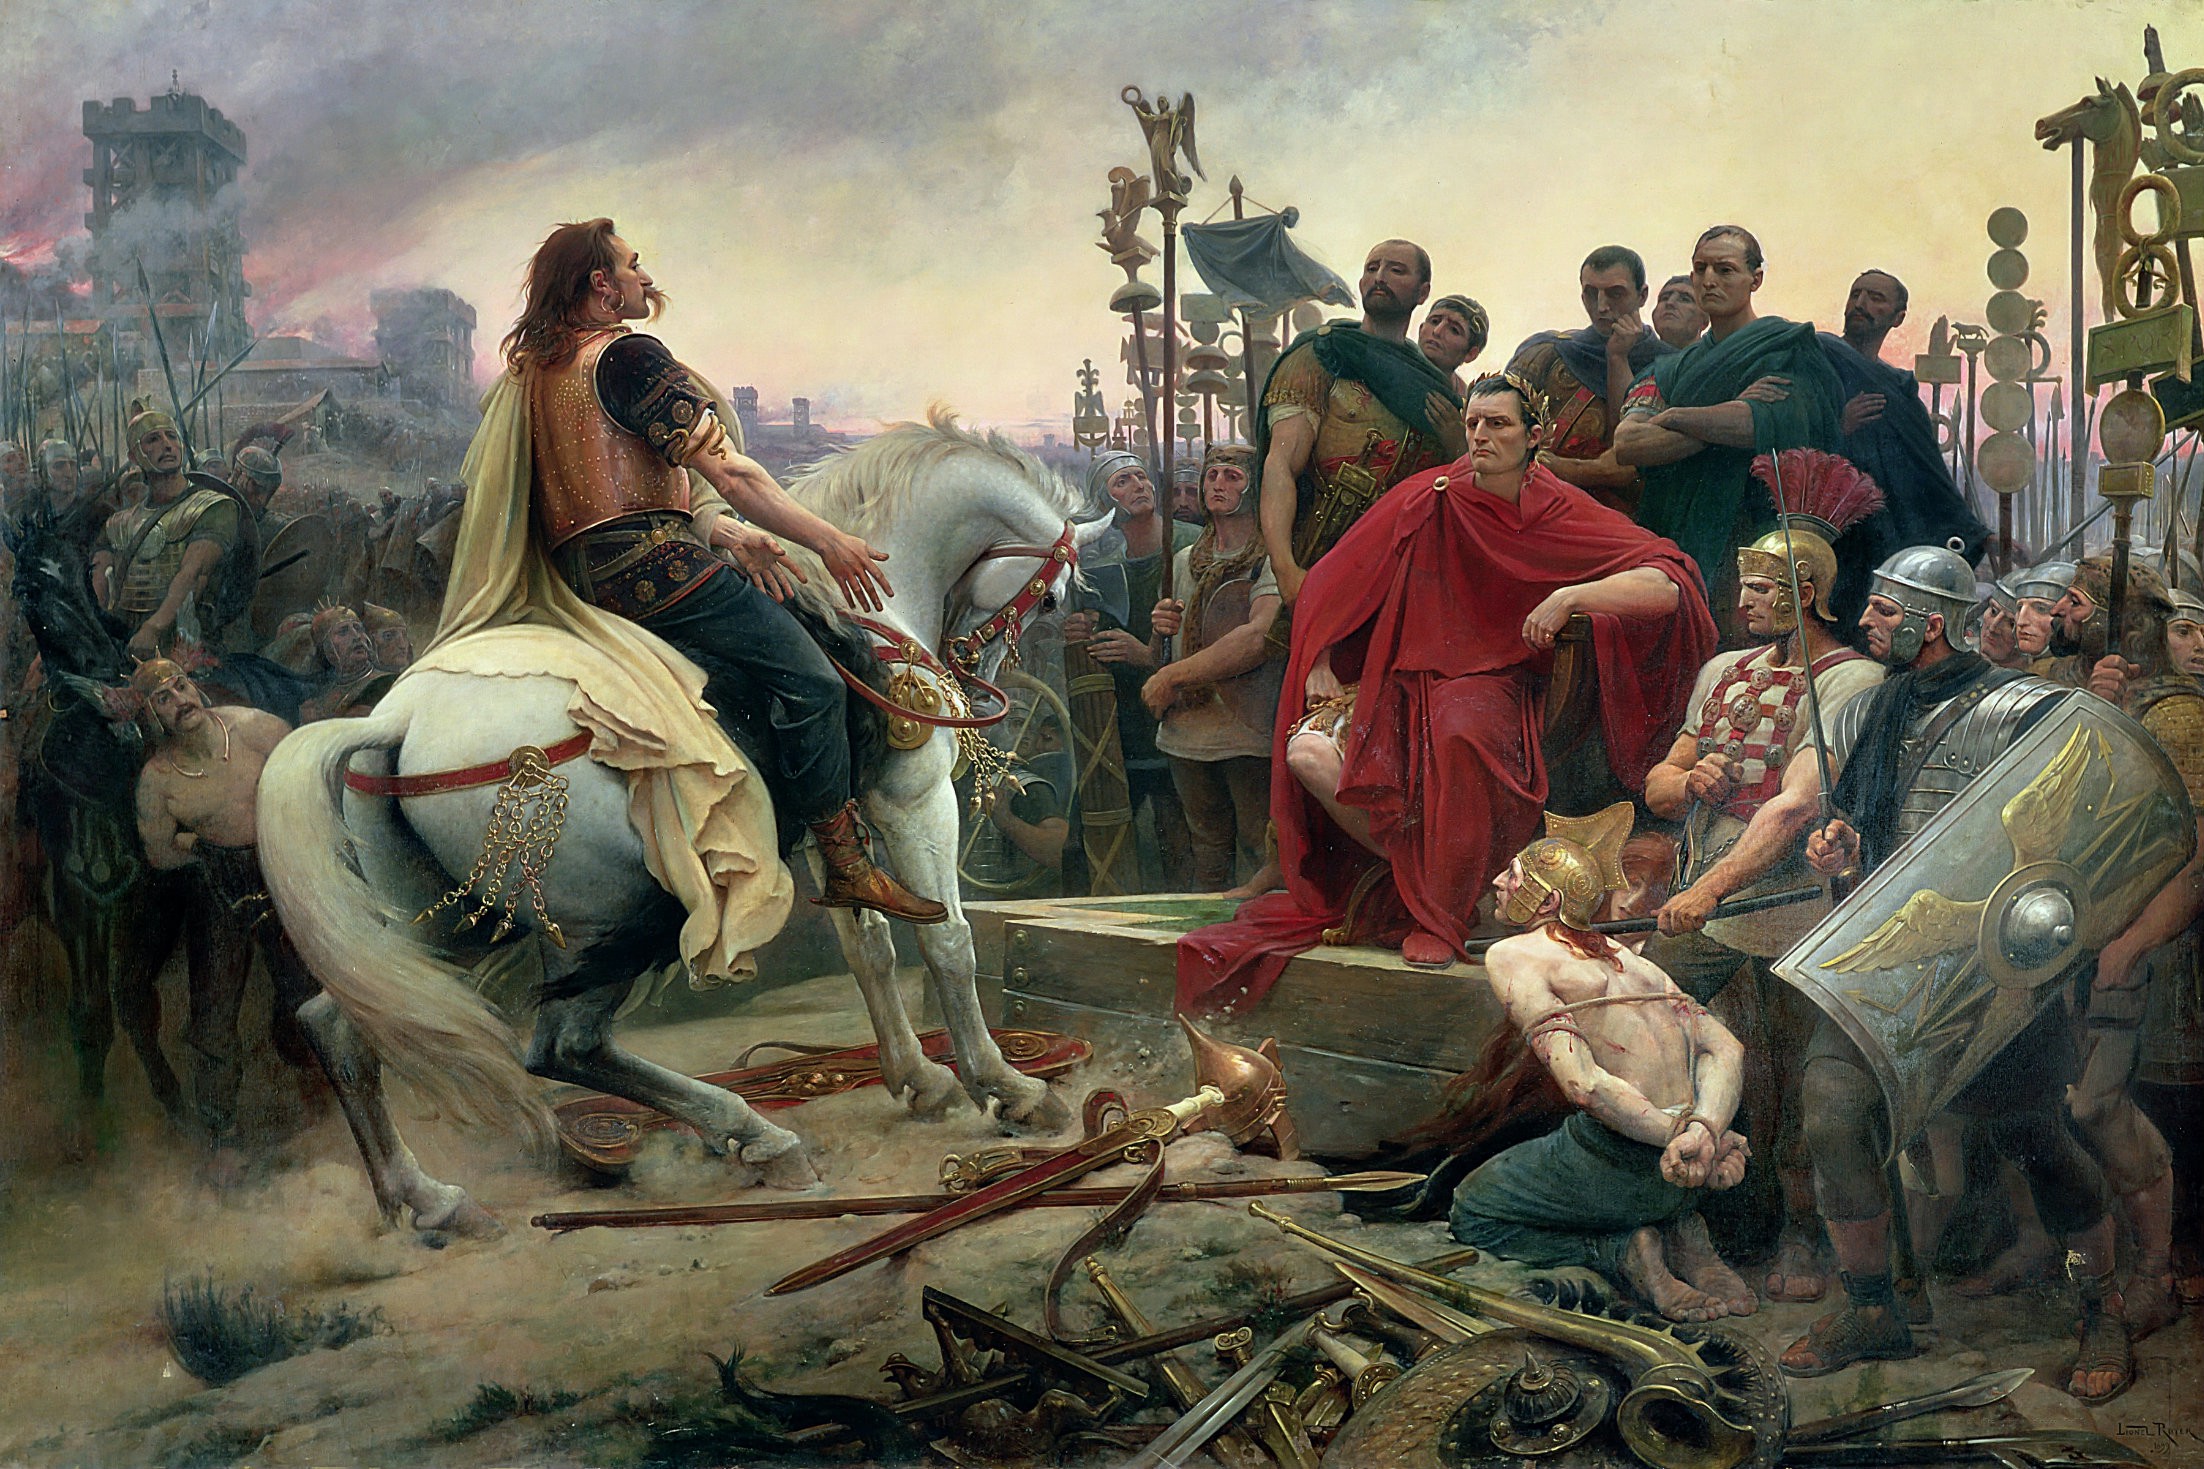 Gallic leader surrendered to Caesar